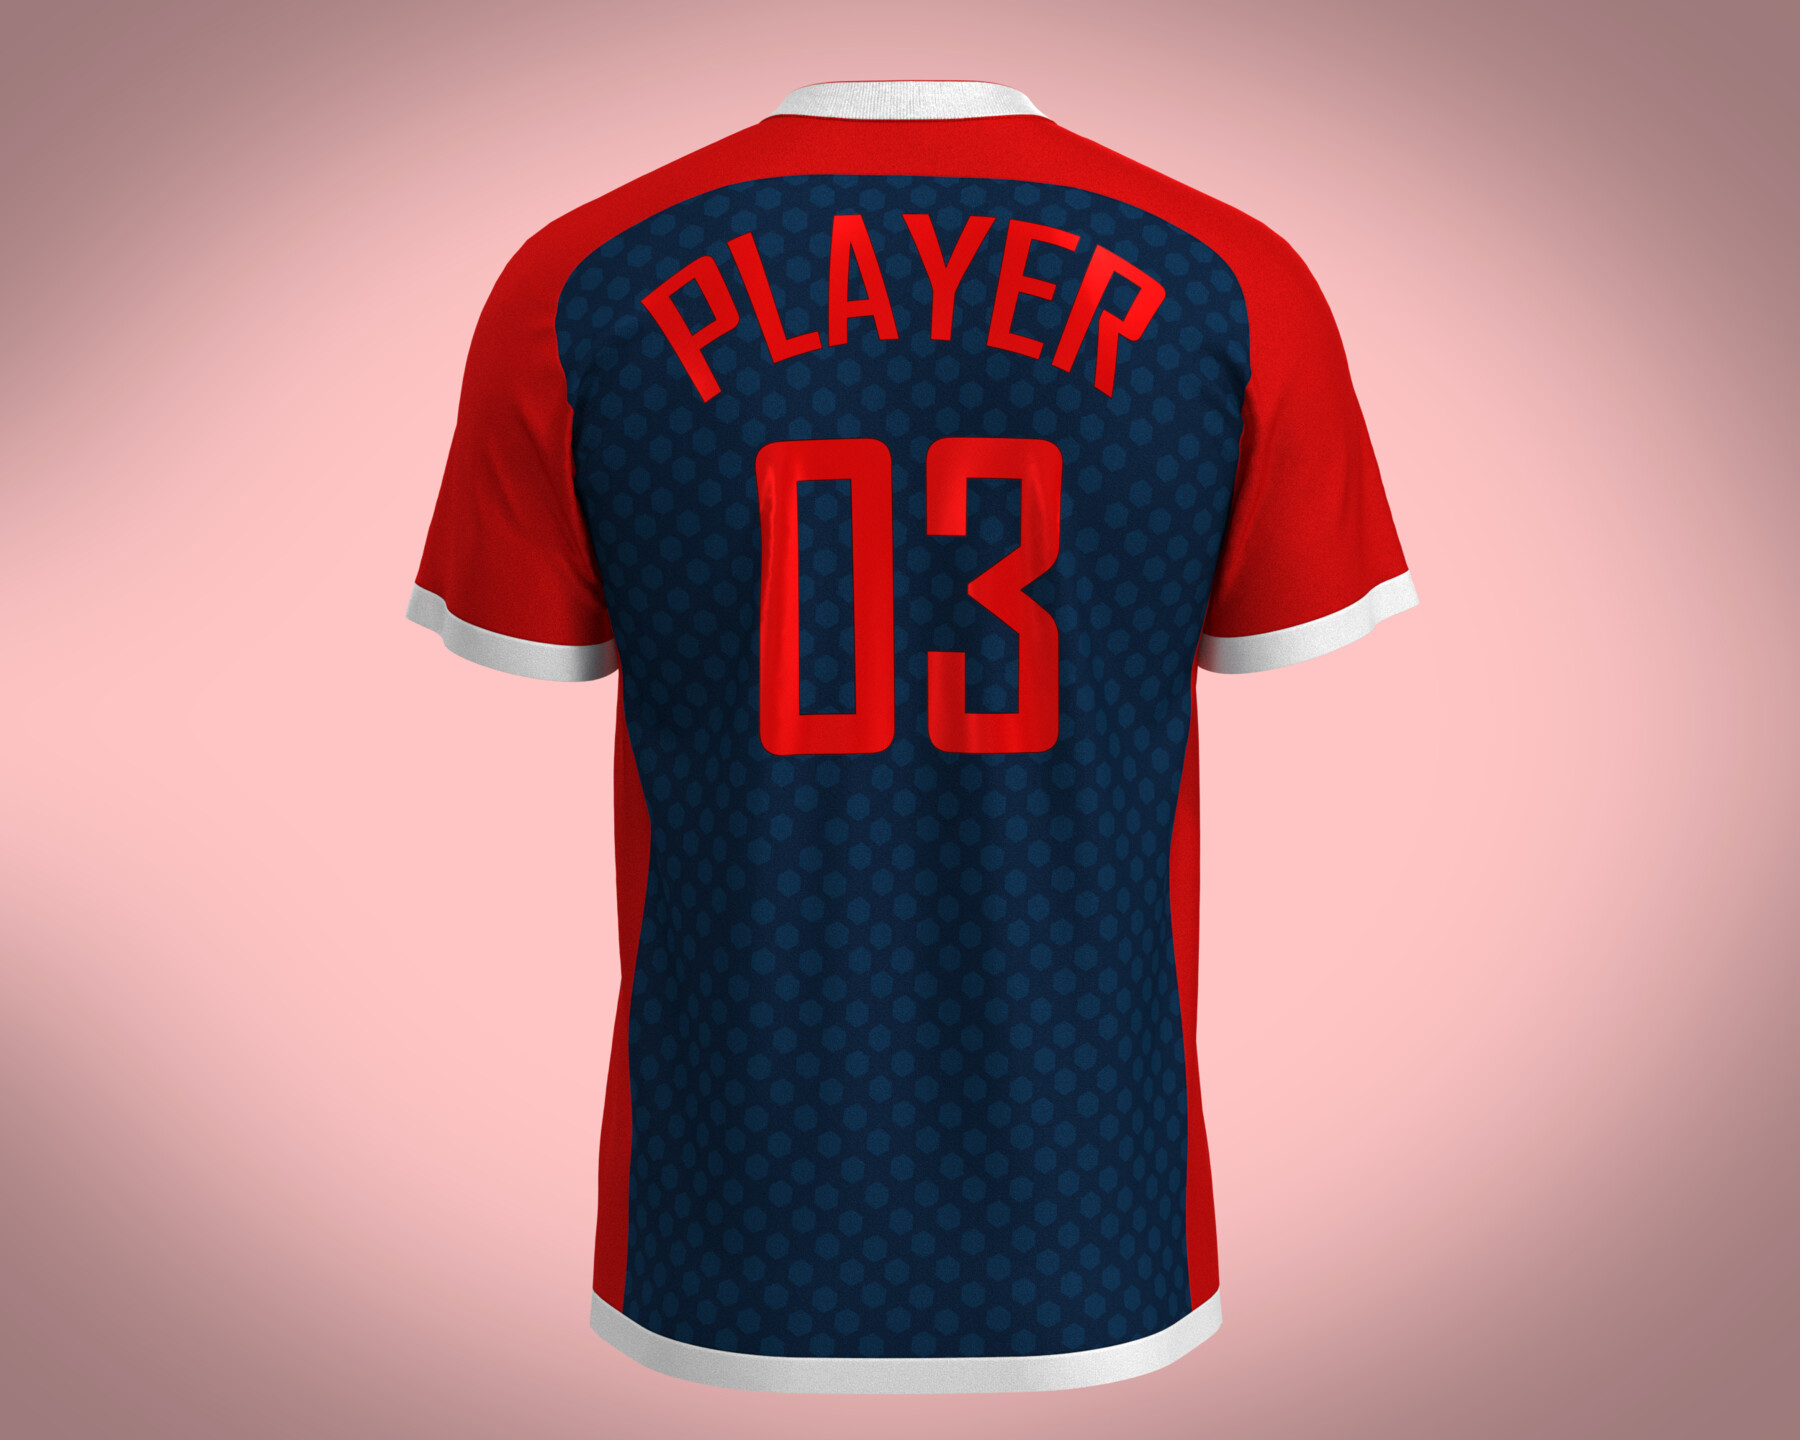 ArtStation - Soccer Red & Blue Jersey Player-11